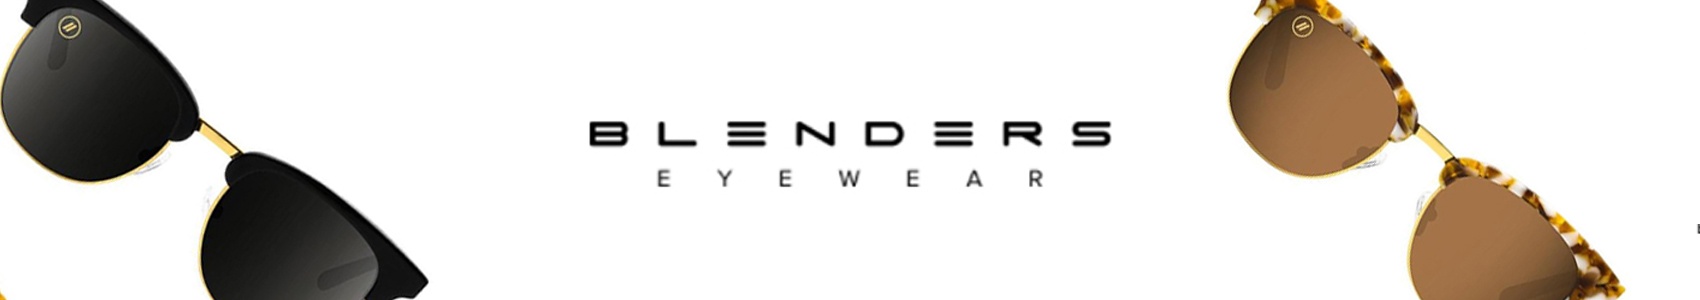 Review: Blender’s Eyewear – Fun, Vibrant Sunglasses for All